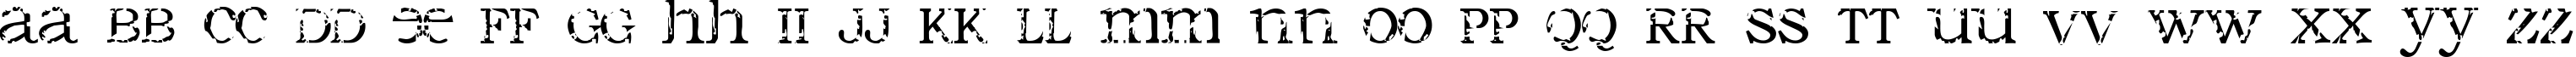 Пример написания английского алфавита шрифтом Seraphim